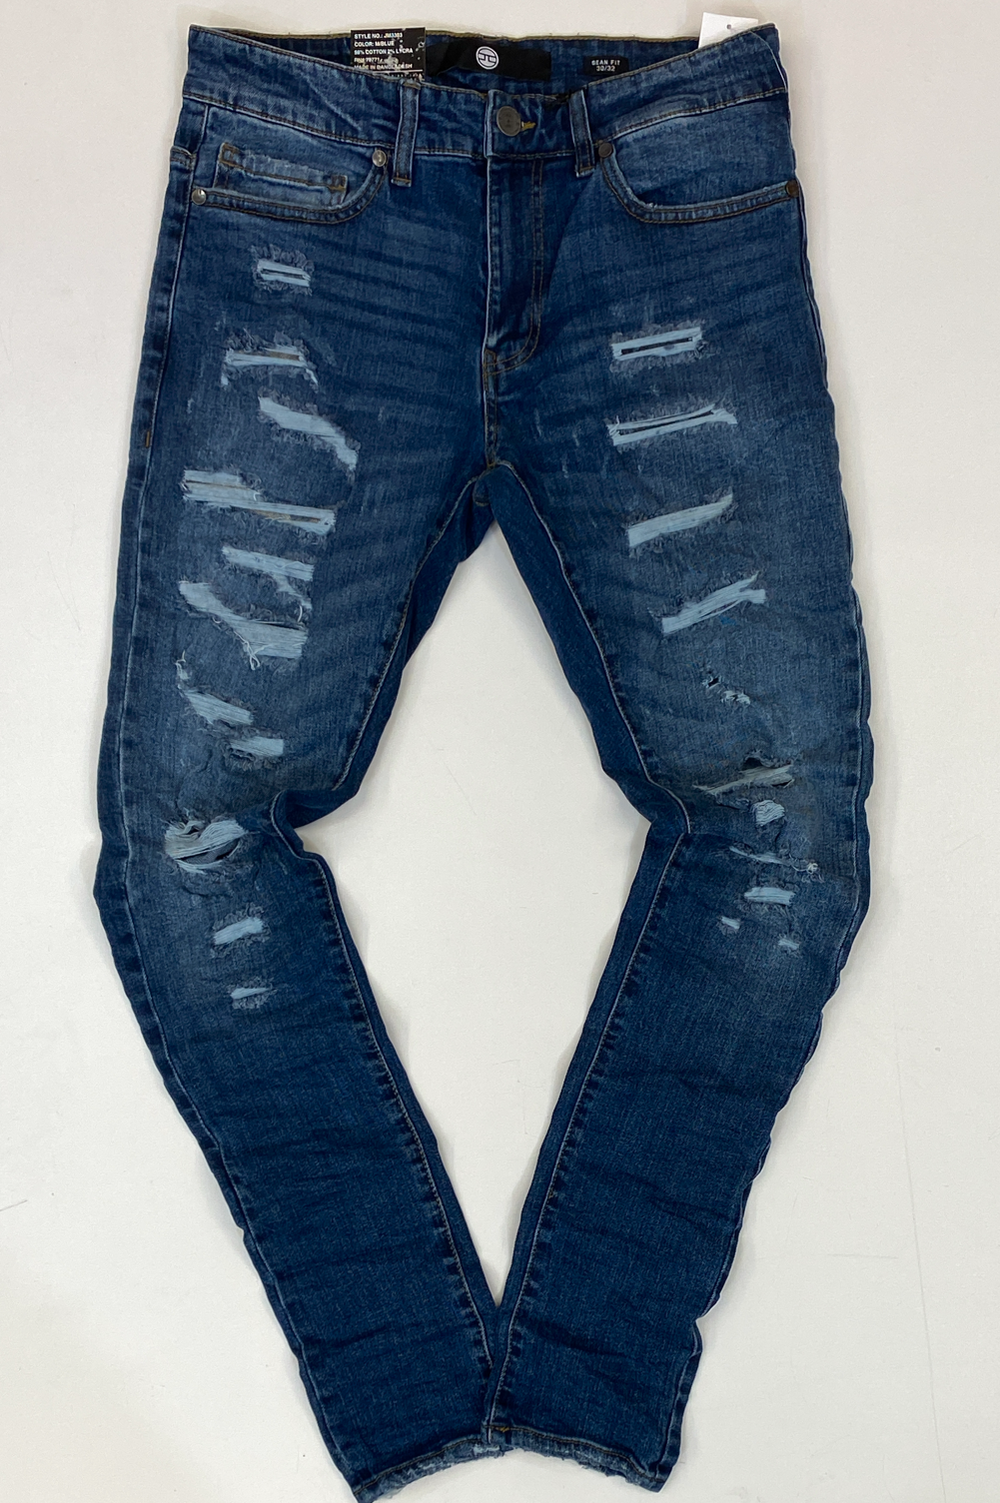 Jordan Craig- crinkled denim jeans with shreds